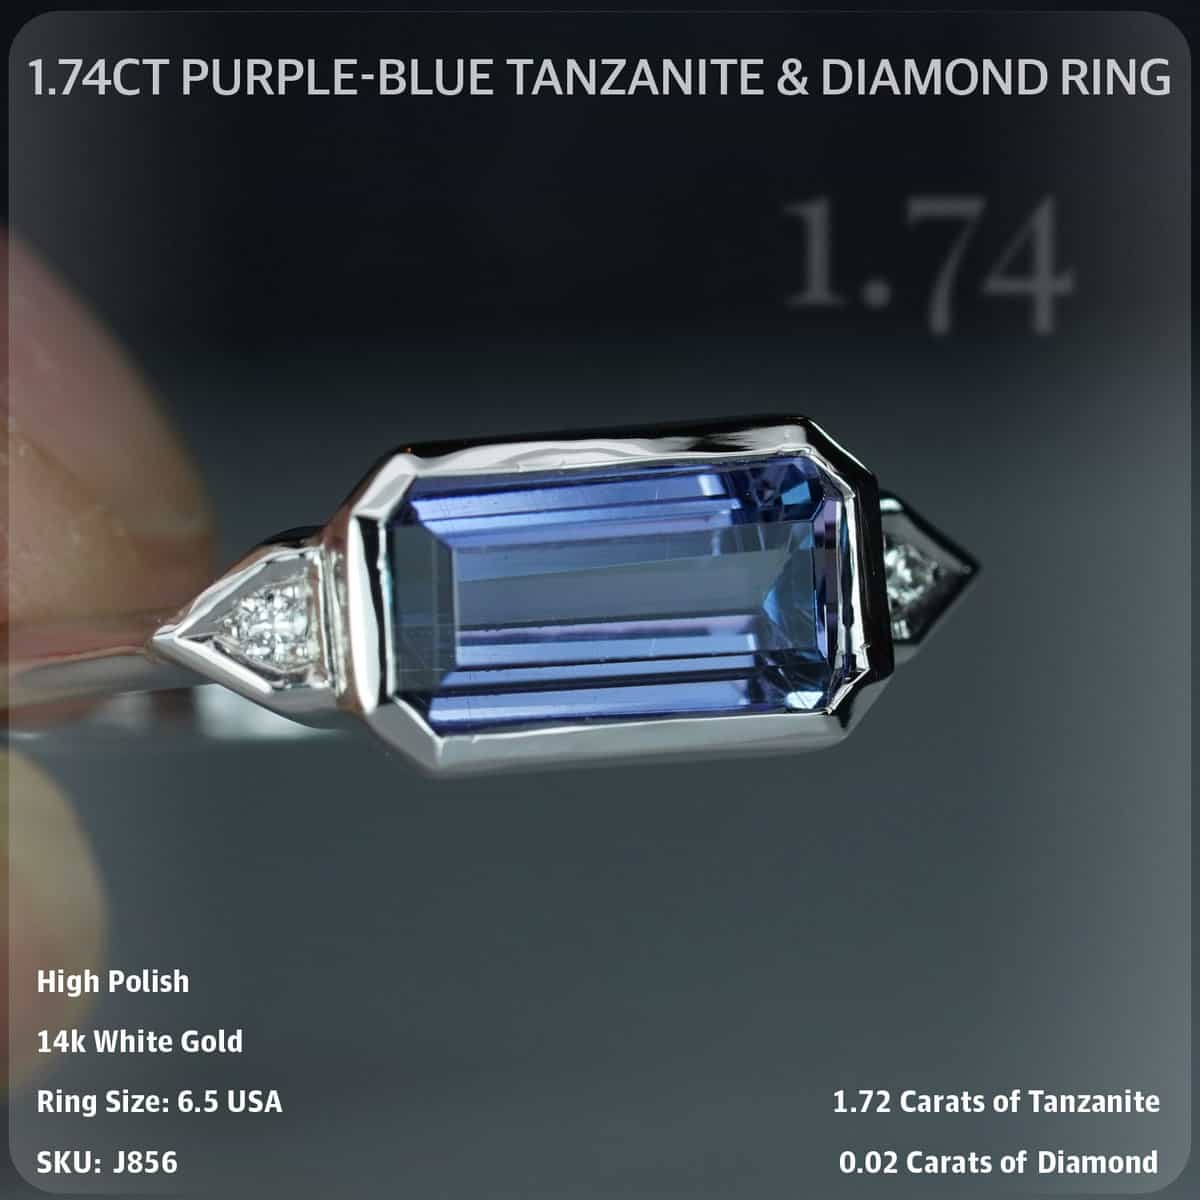 1.74CT Purple-Blue Tanzanite & Diamond Ring